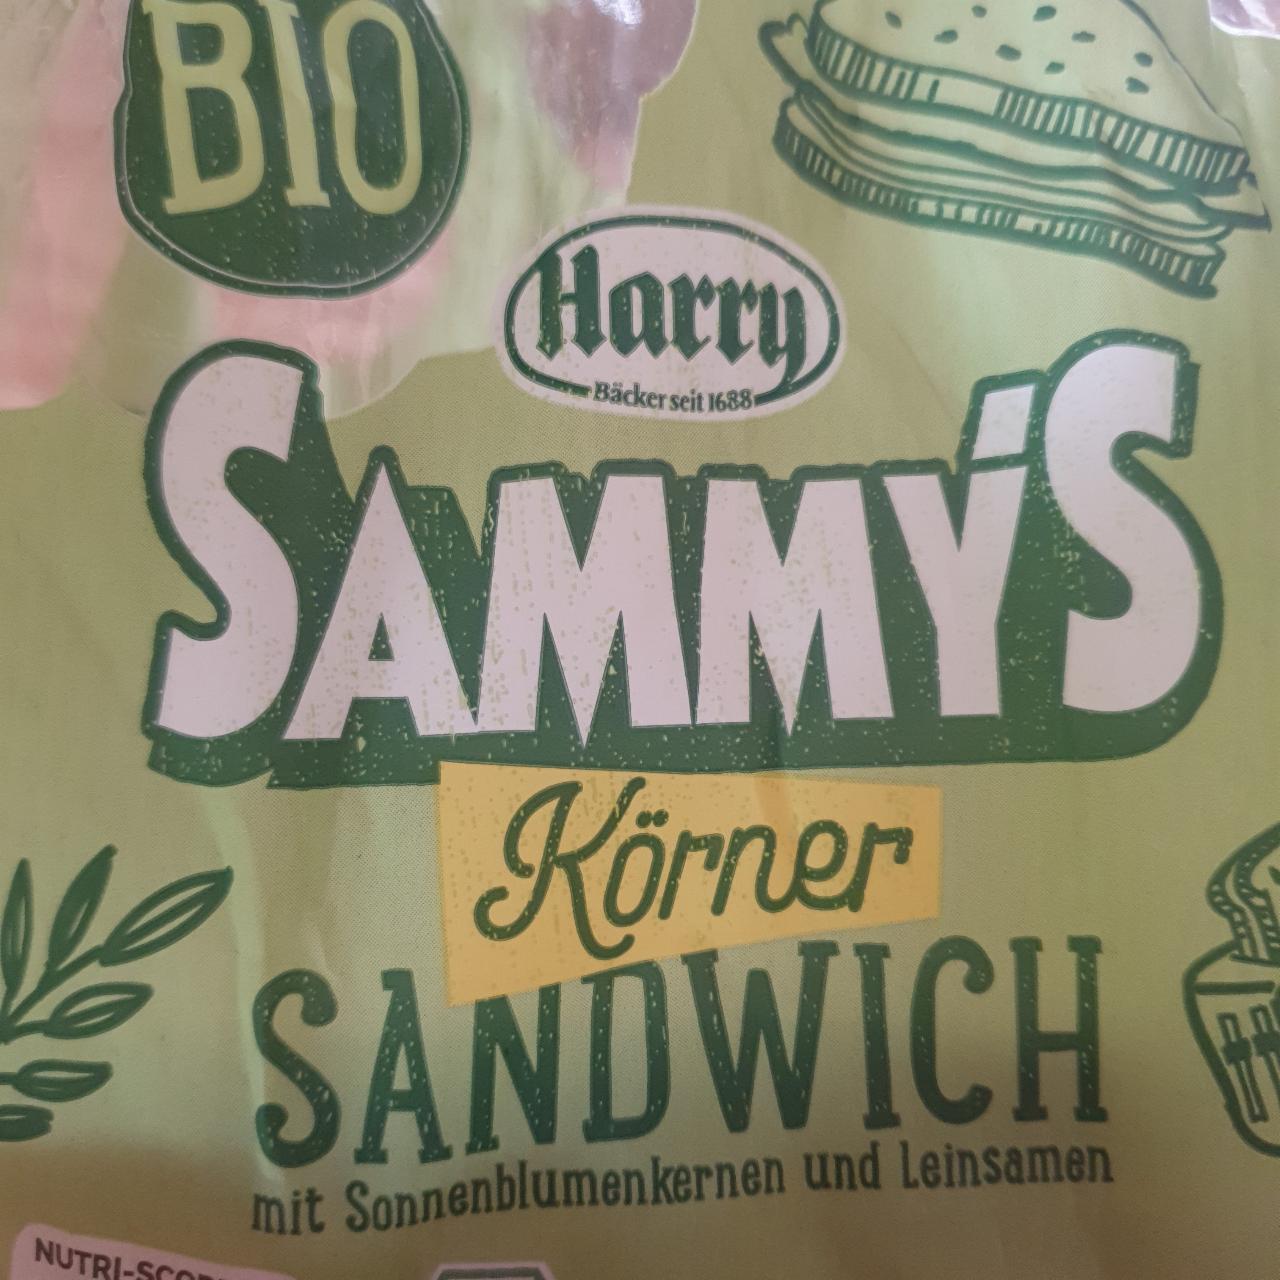 Фото - хлеб для сендвичей sammy's korner sandwich Harry